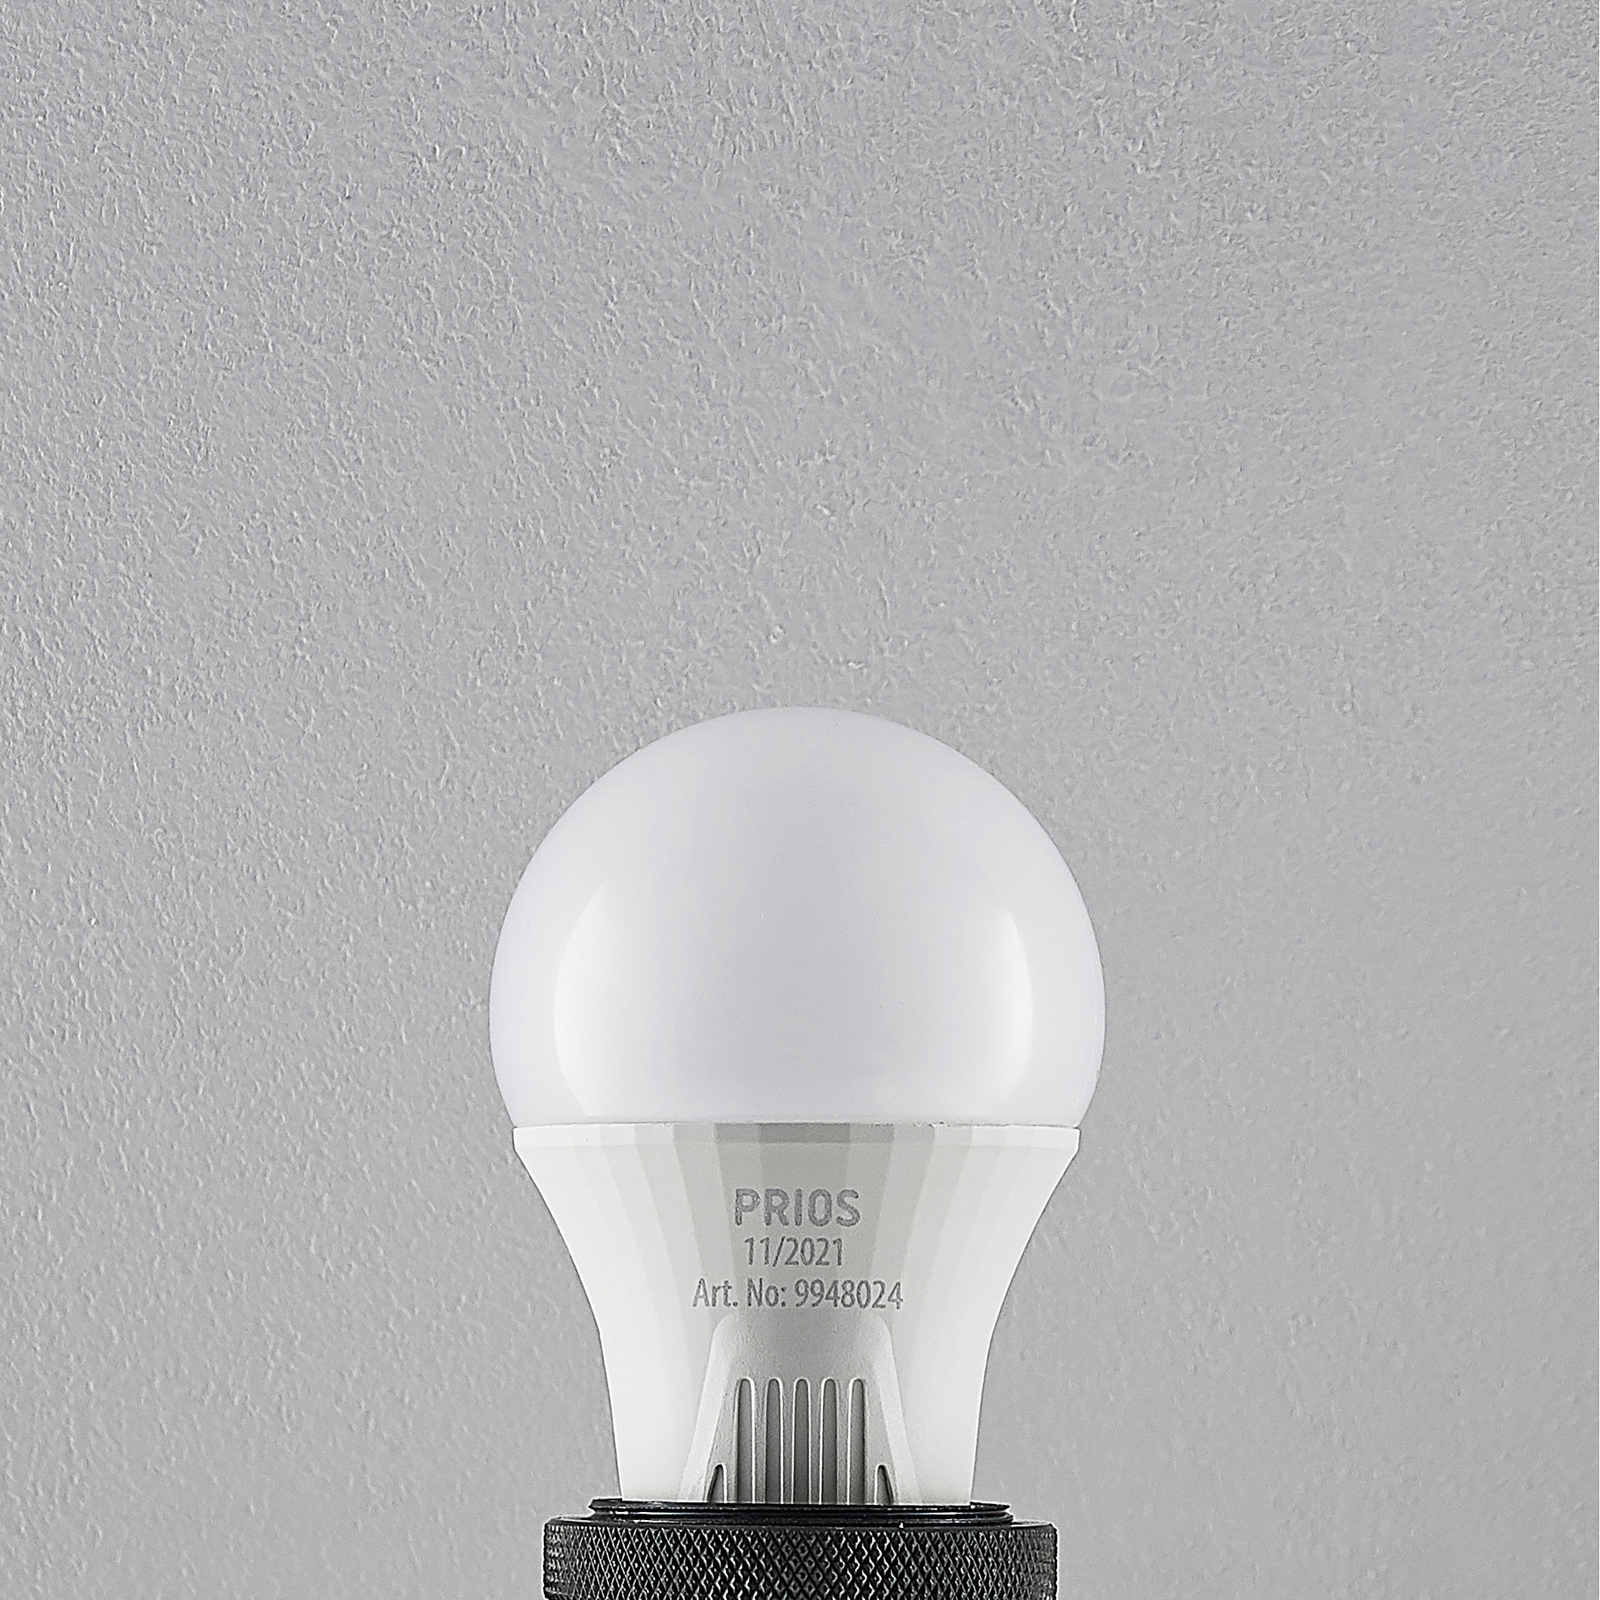 LED bulb E27 A60 11 W white 3,000 K 3-pack